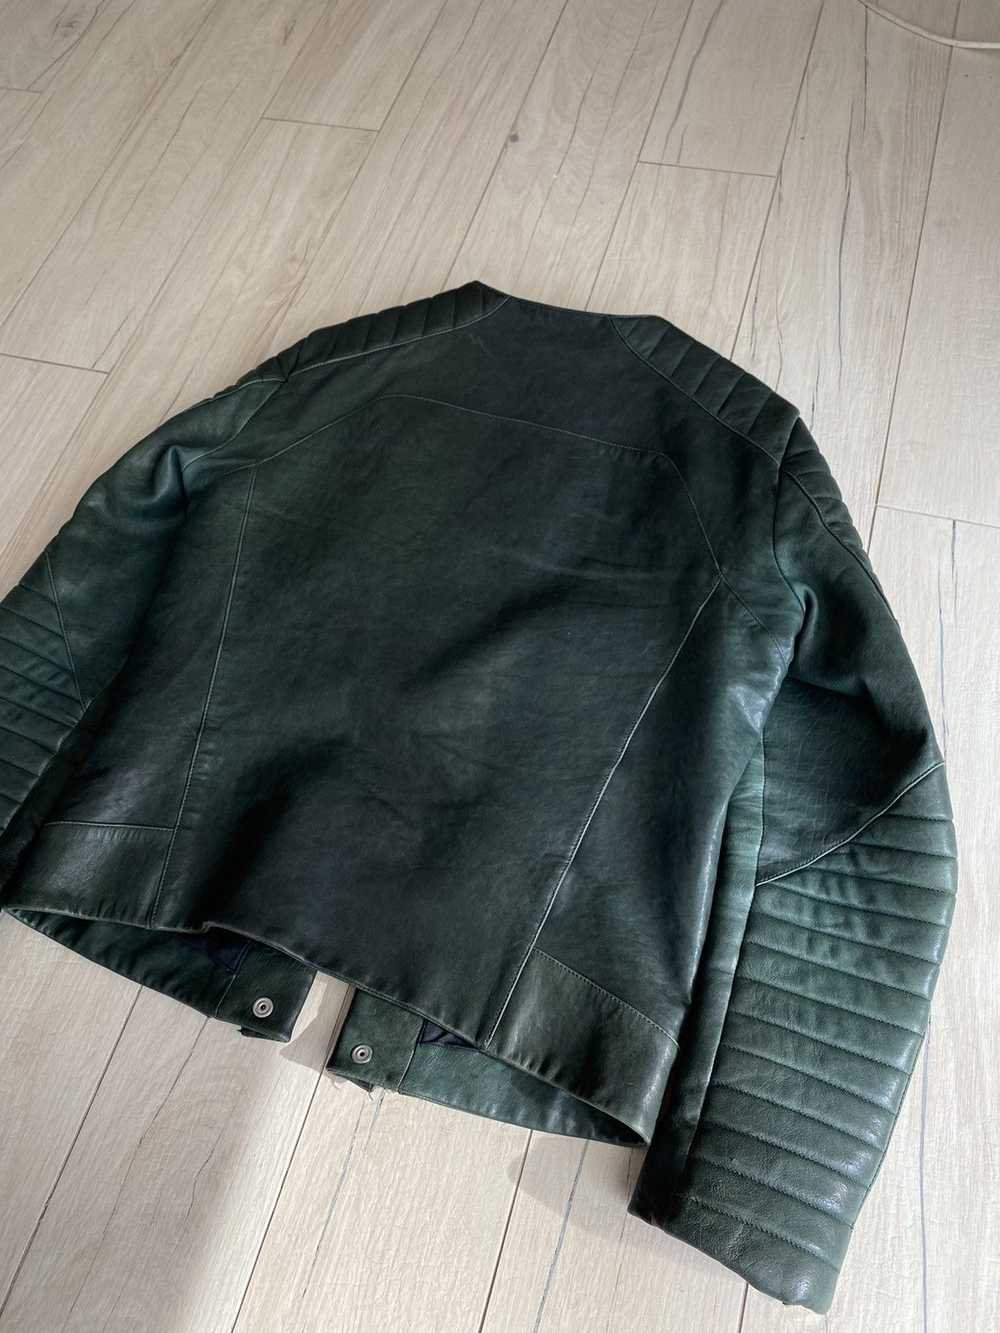 Balmain Balmain Iconic Green Lambskin Leather Bik… - image 8